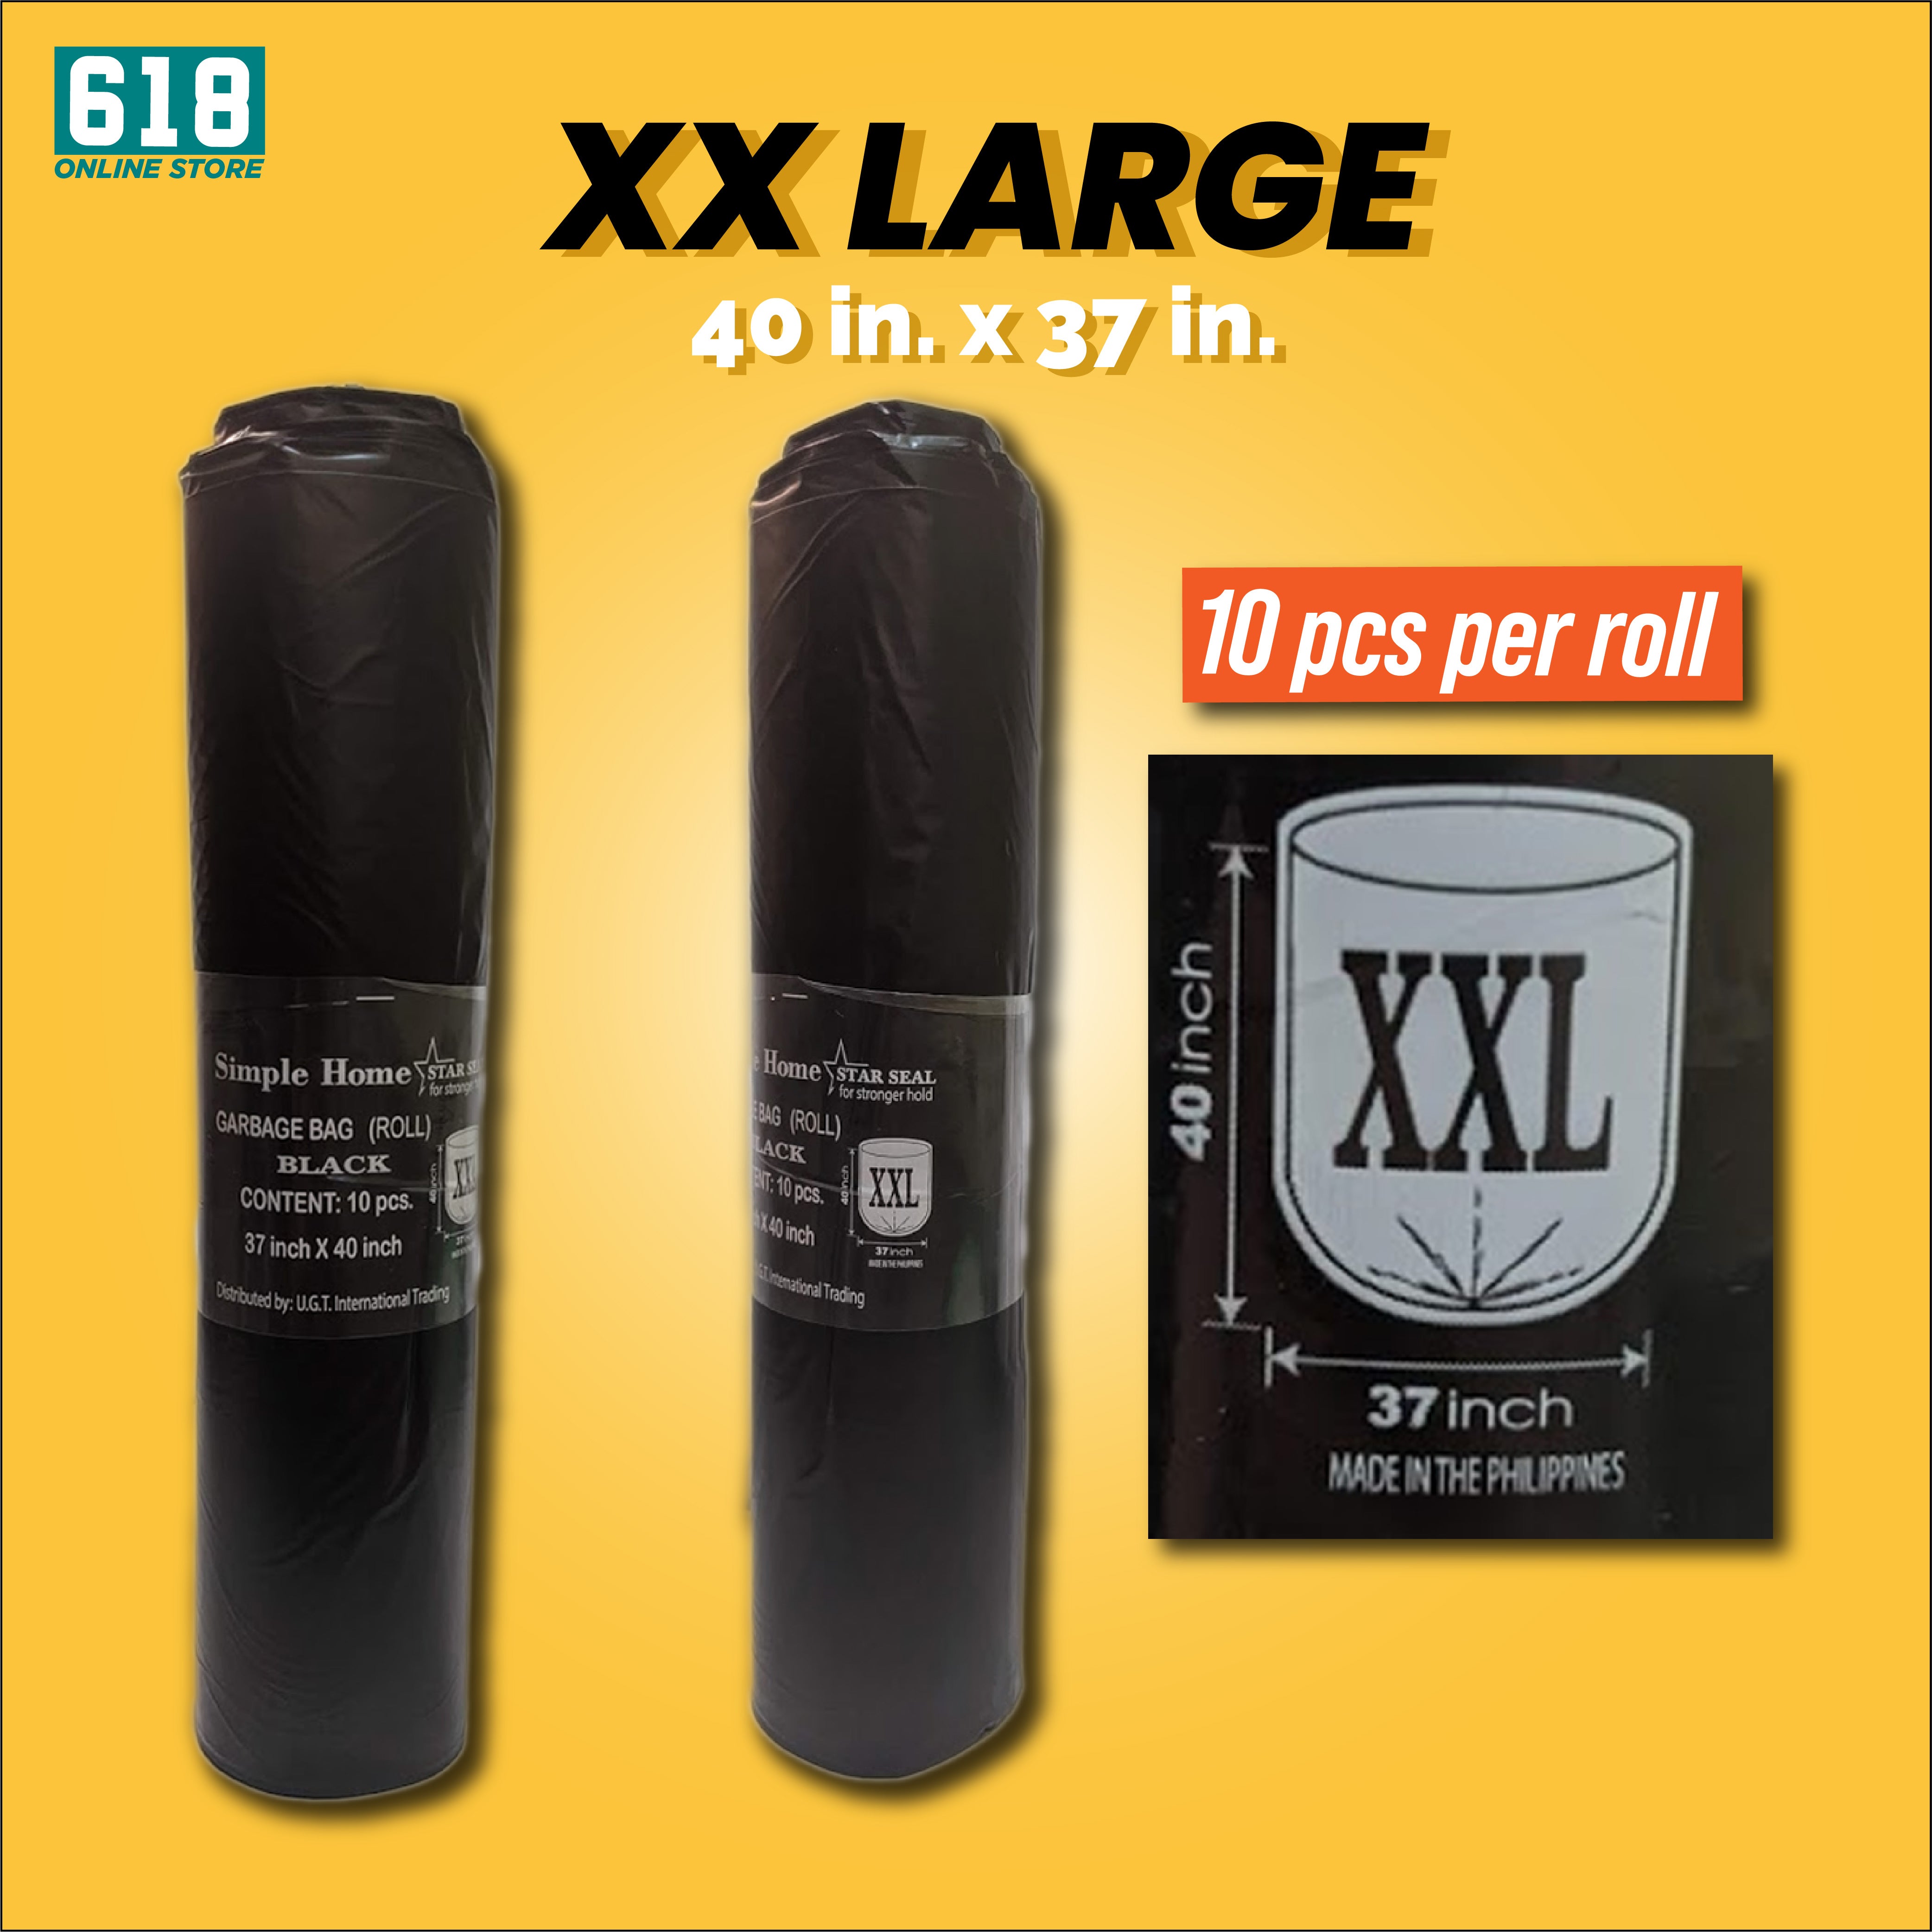 Trash Bag / Garbage Bag / Bin Bag Simple Home - Black (S,M,L,XL,XXL) - Star Sealed / X Sealed